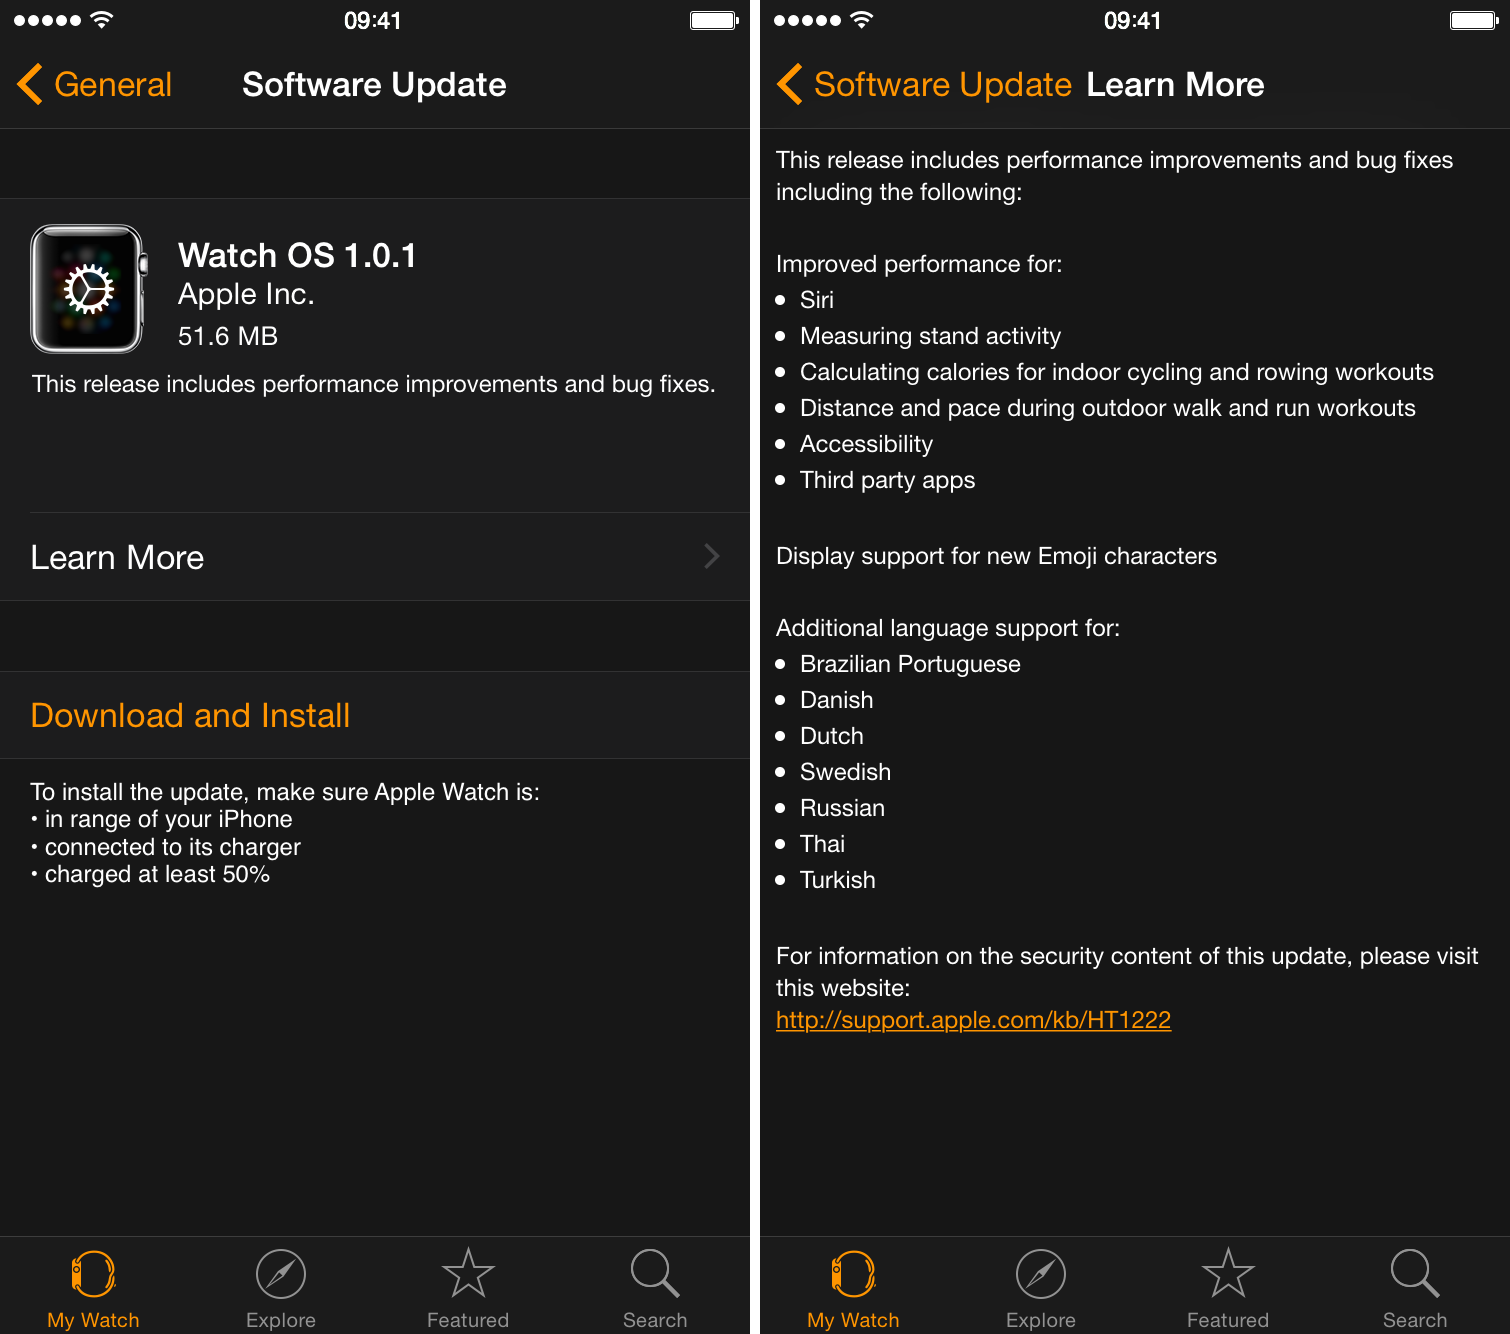 Apple Watch 1.0.1 OS update